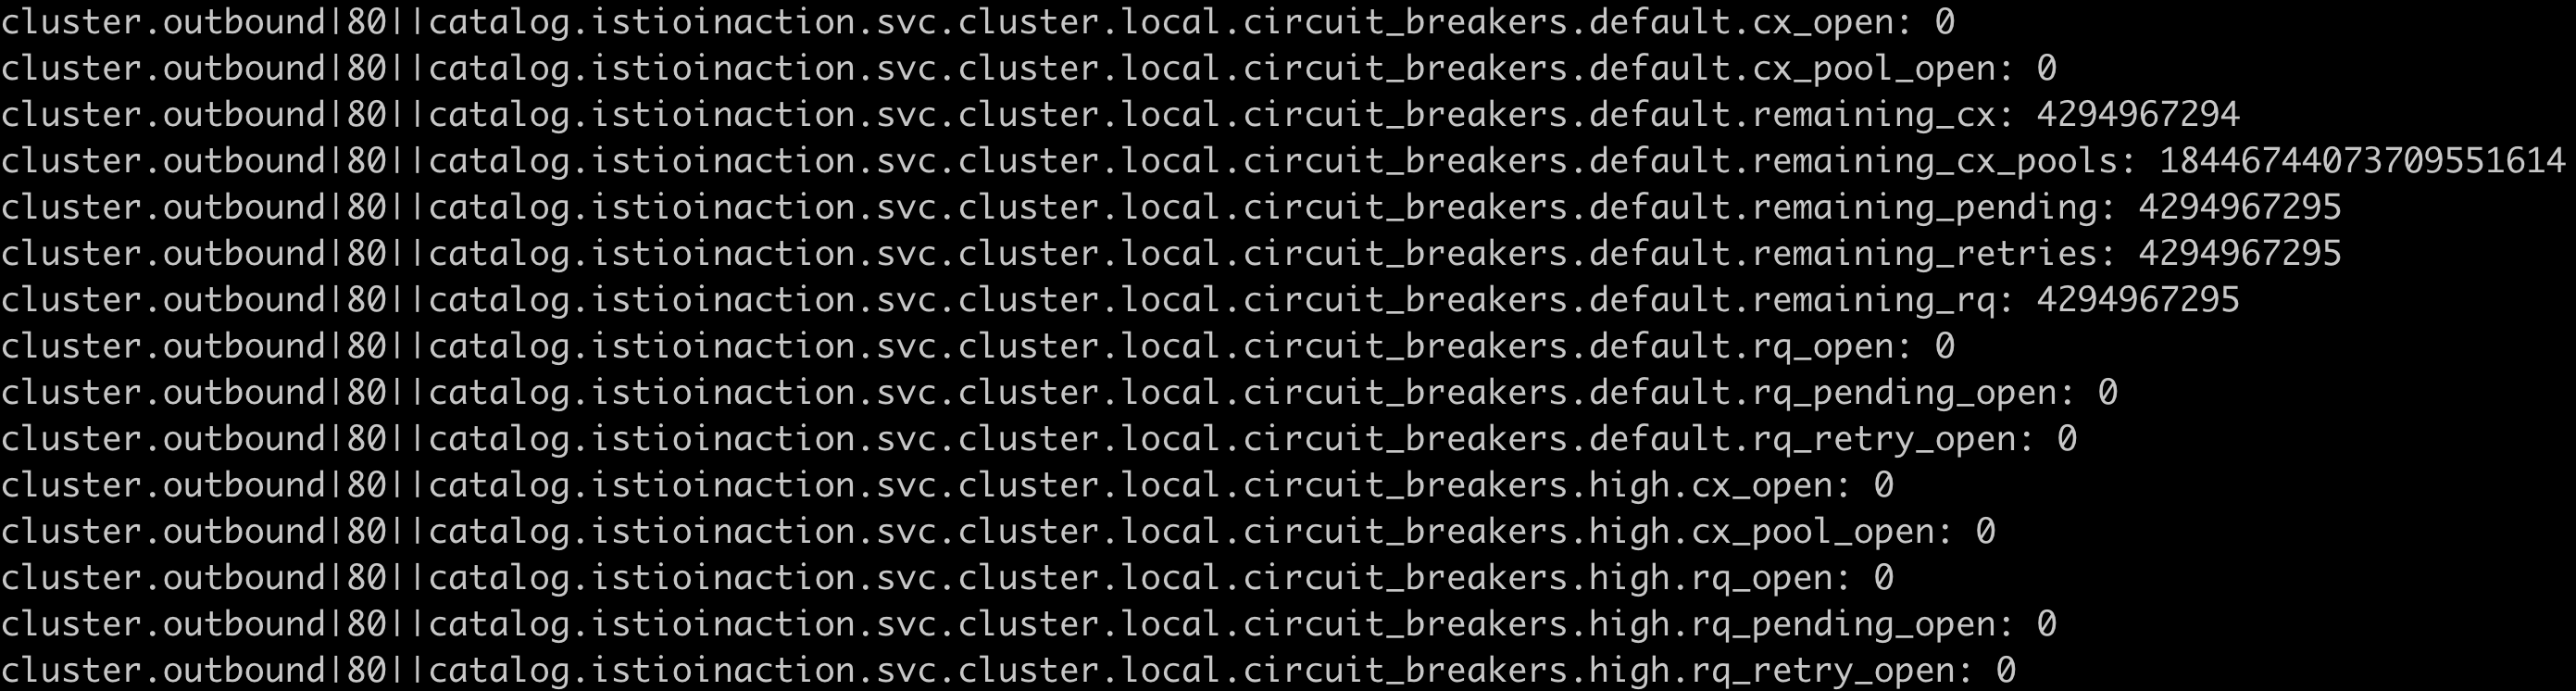 circuit_break 정보